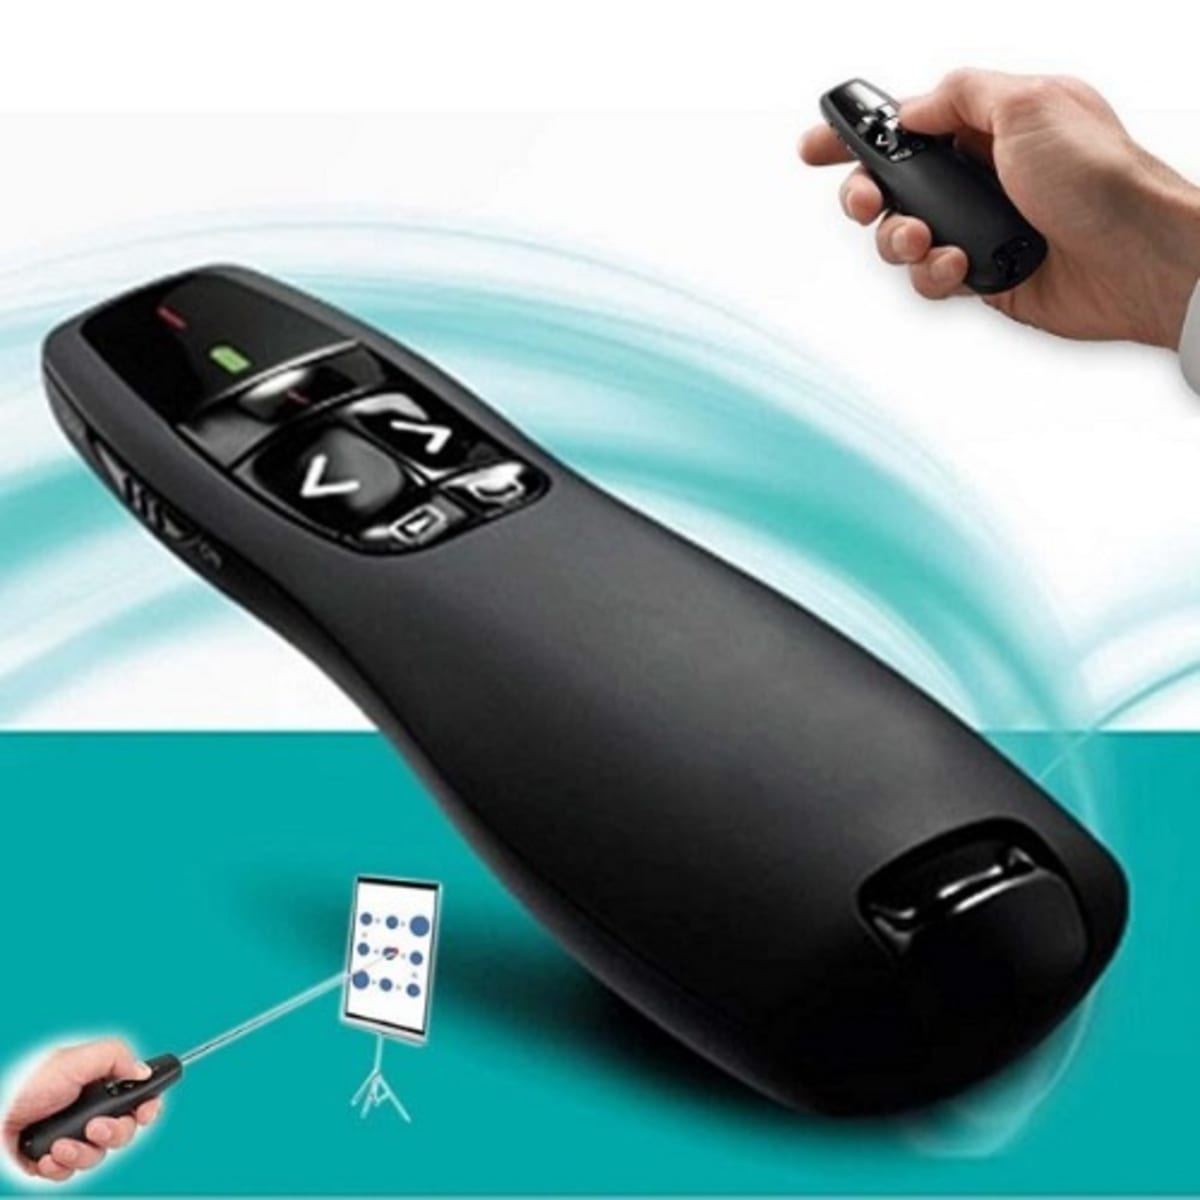 Logitech R400 Wireless Presenter Remote Control